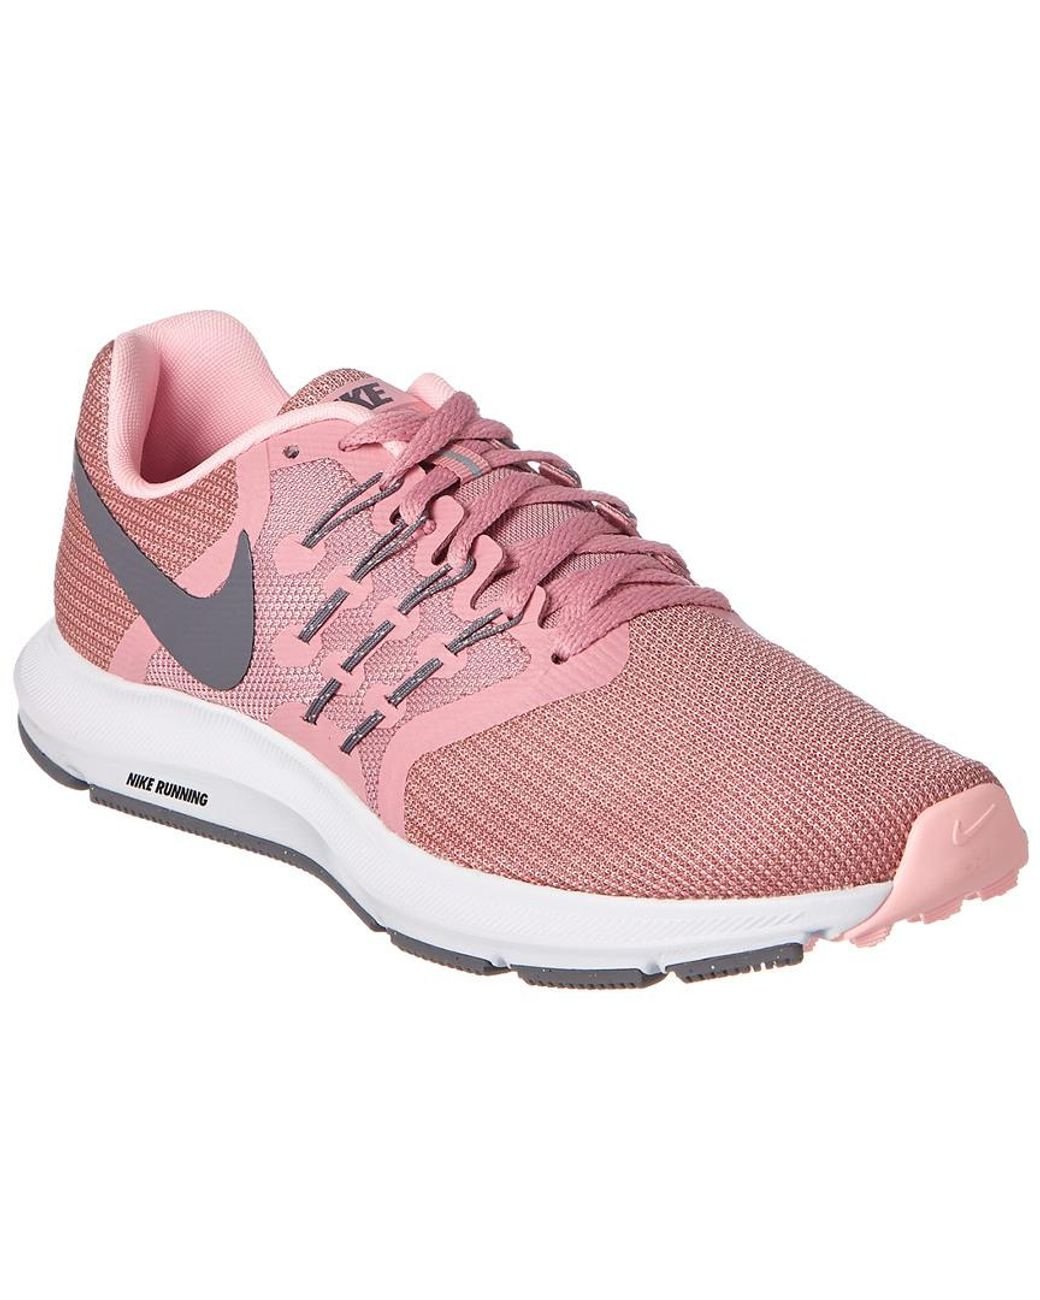 Romper posterior Clasificar Nike Women's Run Swift Running Shoe in Pink | Lyst